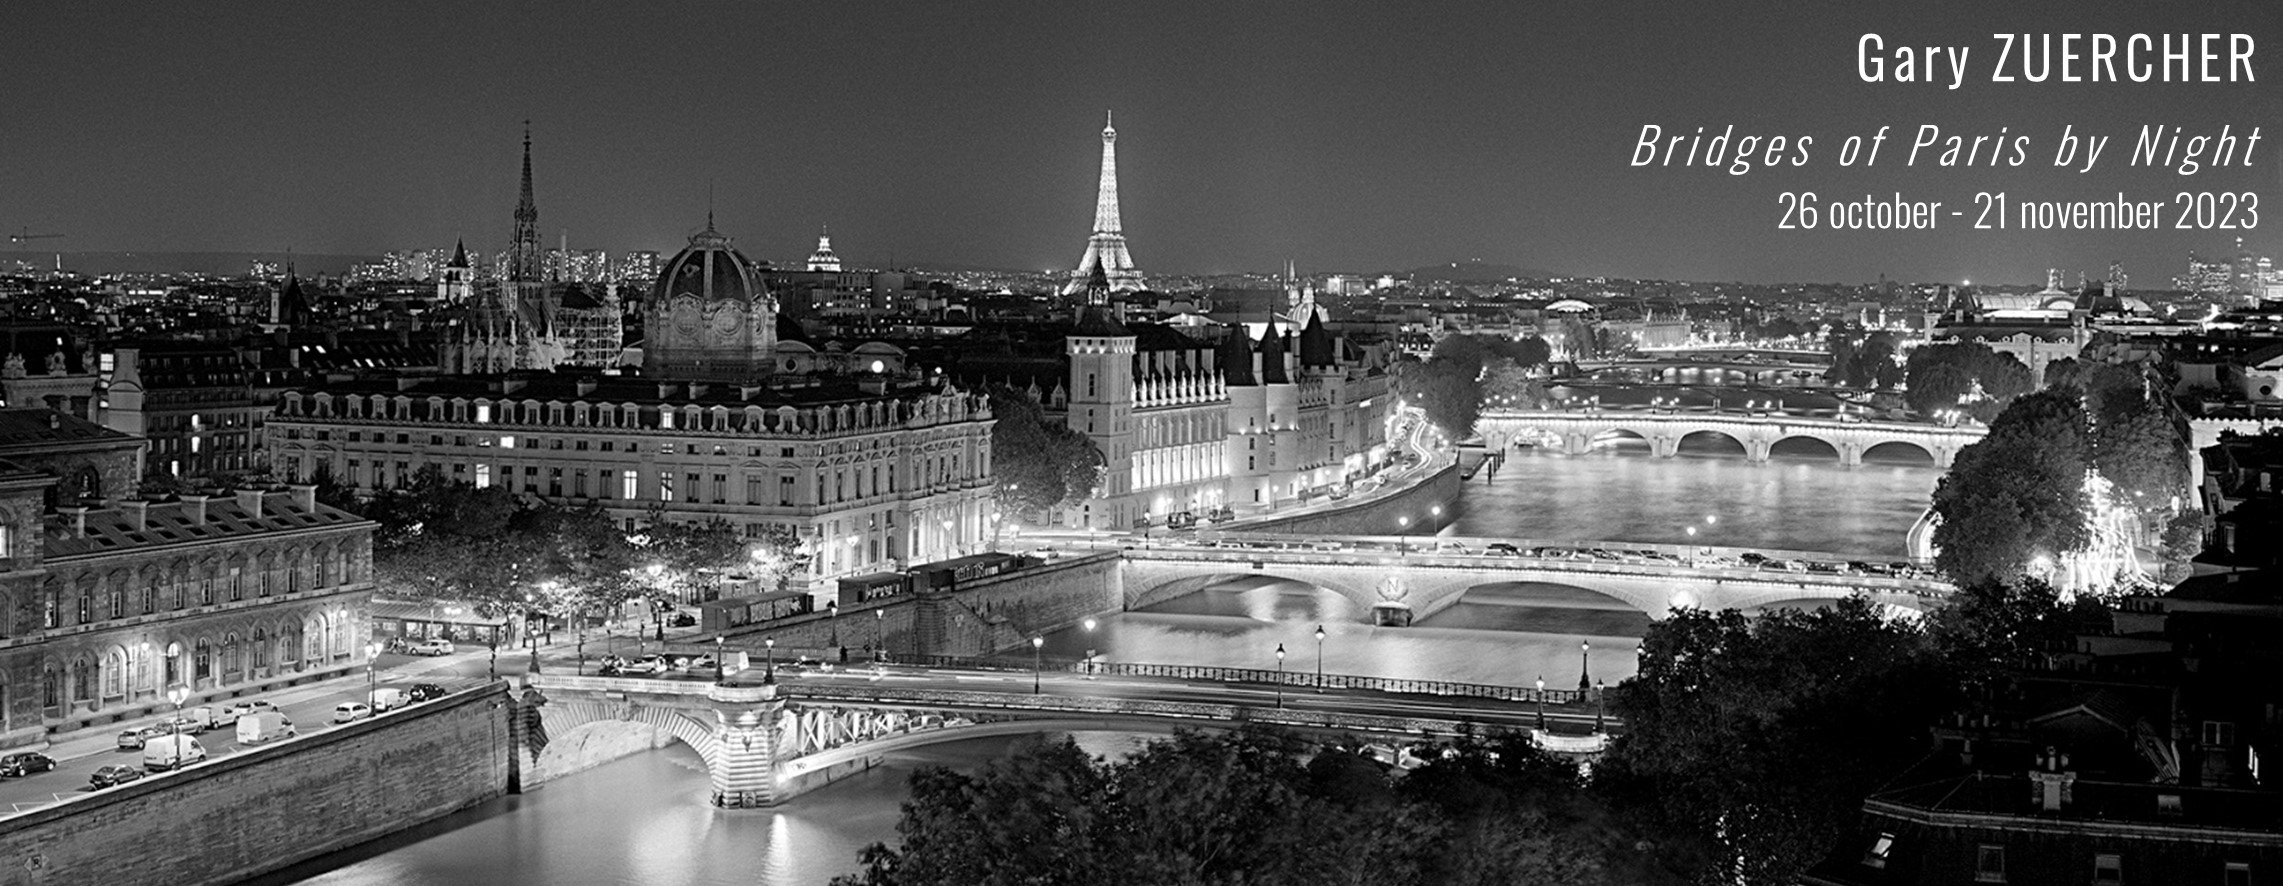 Pont des Arts - Gallery of fine art photography in Paris